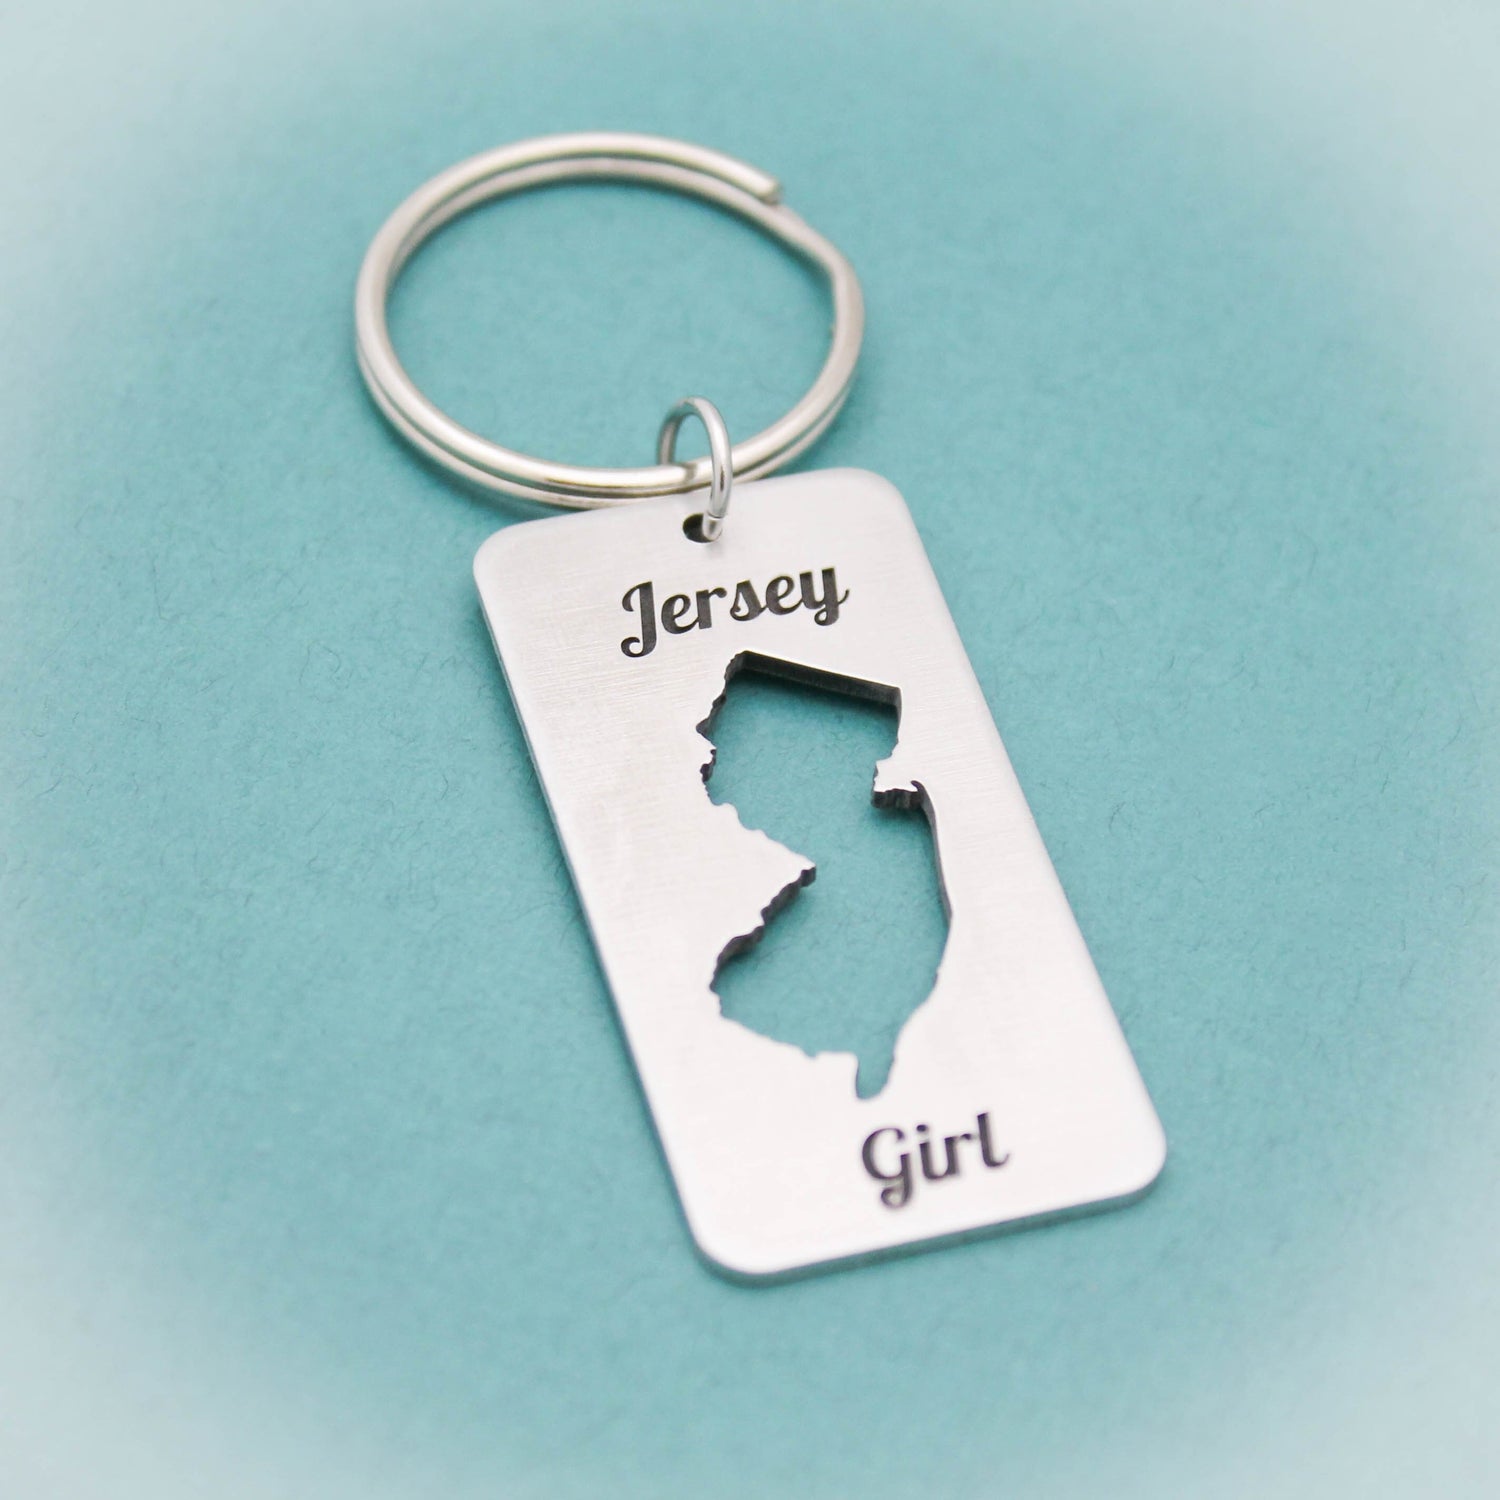 Jersey Girl Rectangle Keychain, Aluminum New Jersey State Shape Keychain, Jersey Girl Gift, Gift for Her, New Jersey Keychain, NJ State Gift